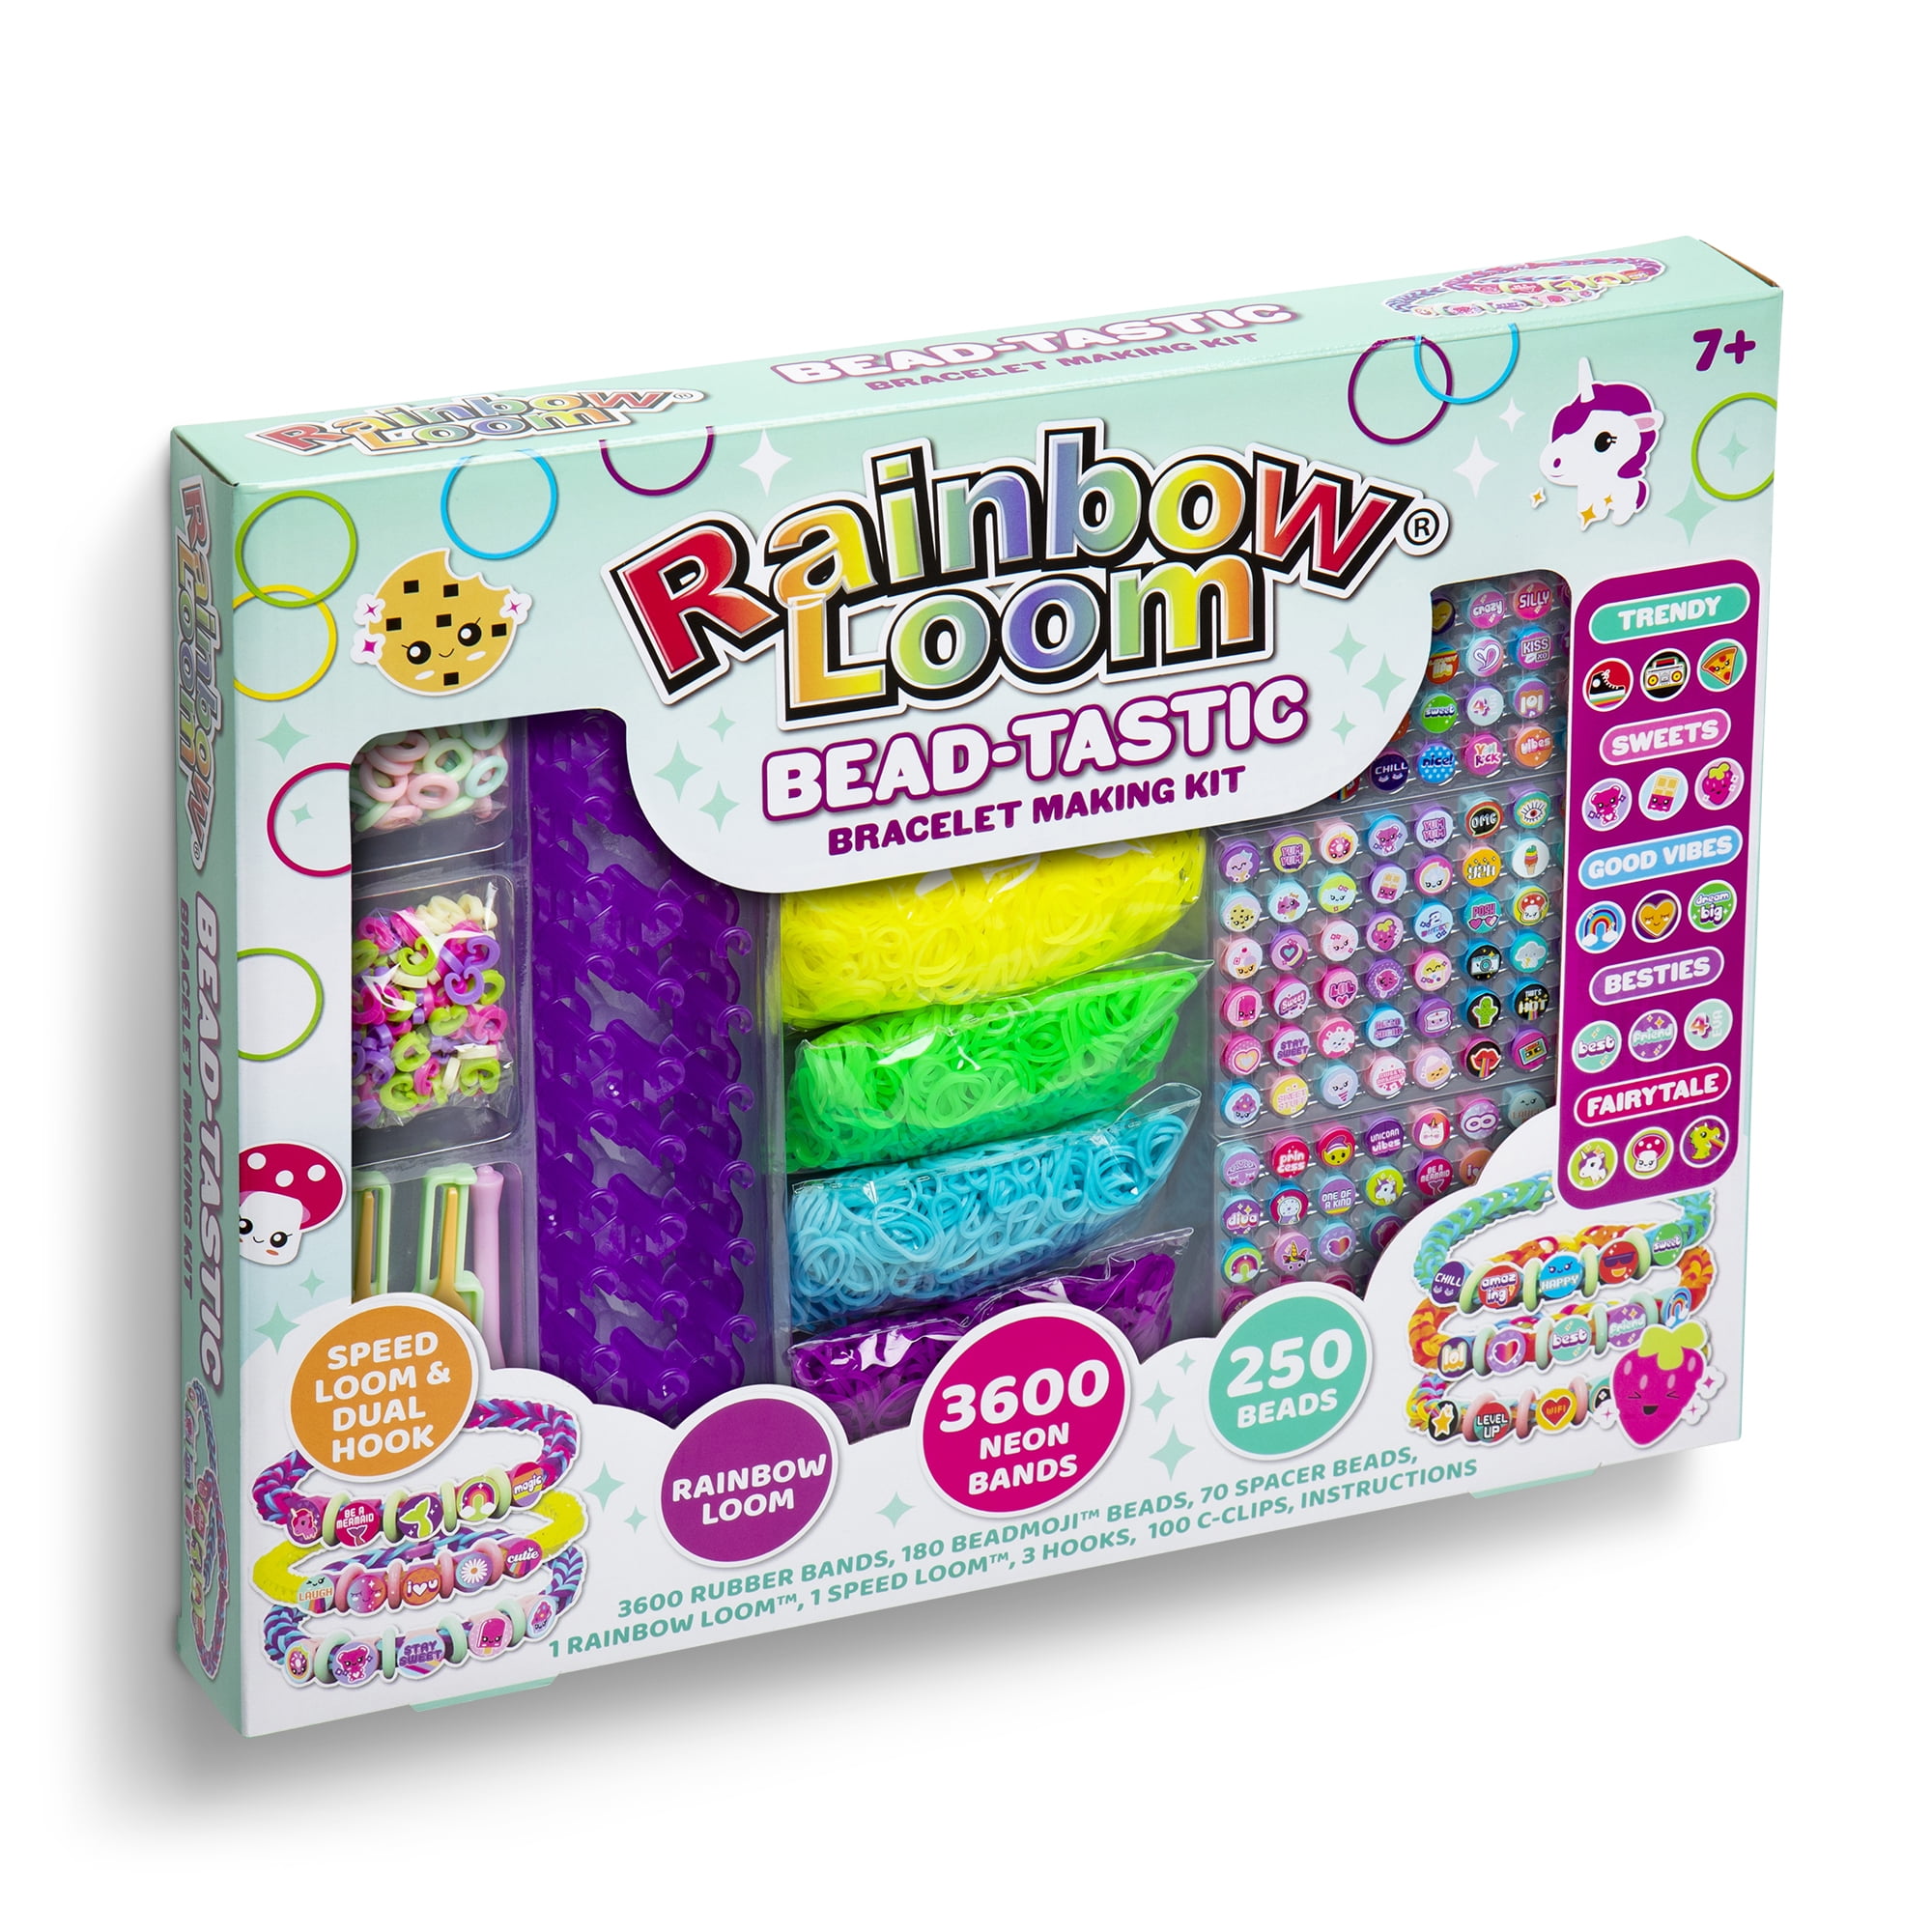 Complete rainbow loom kit - Beading & Jewelry Making Kits - Rocky Point,  New York, Facebook Marketplace